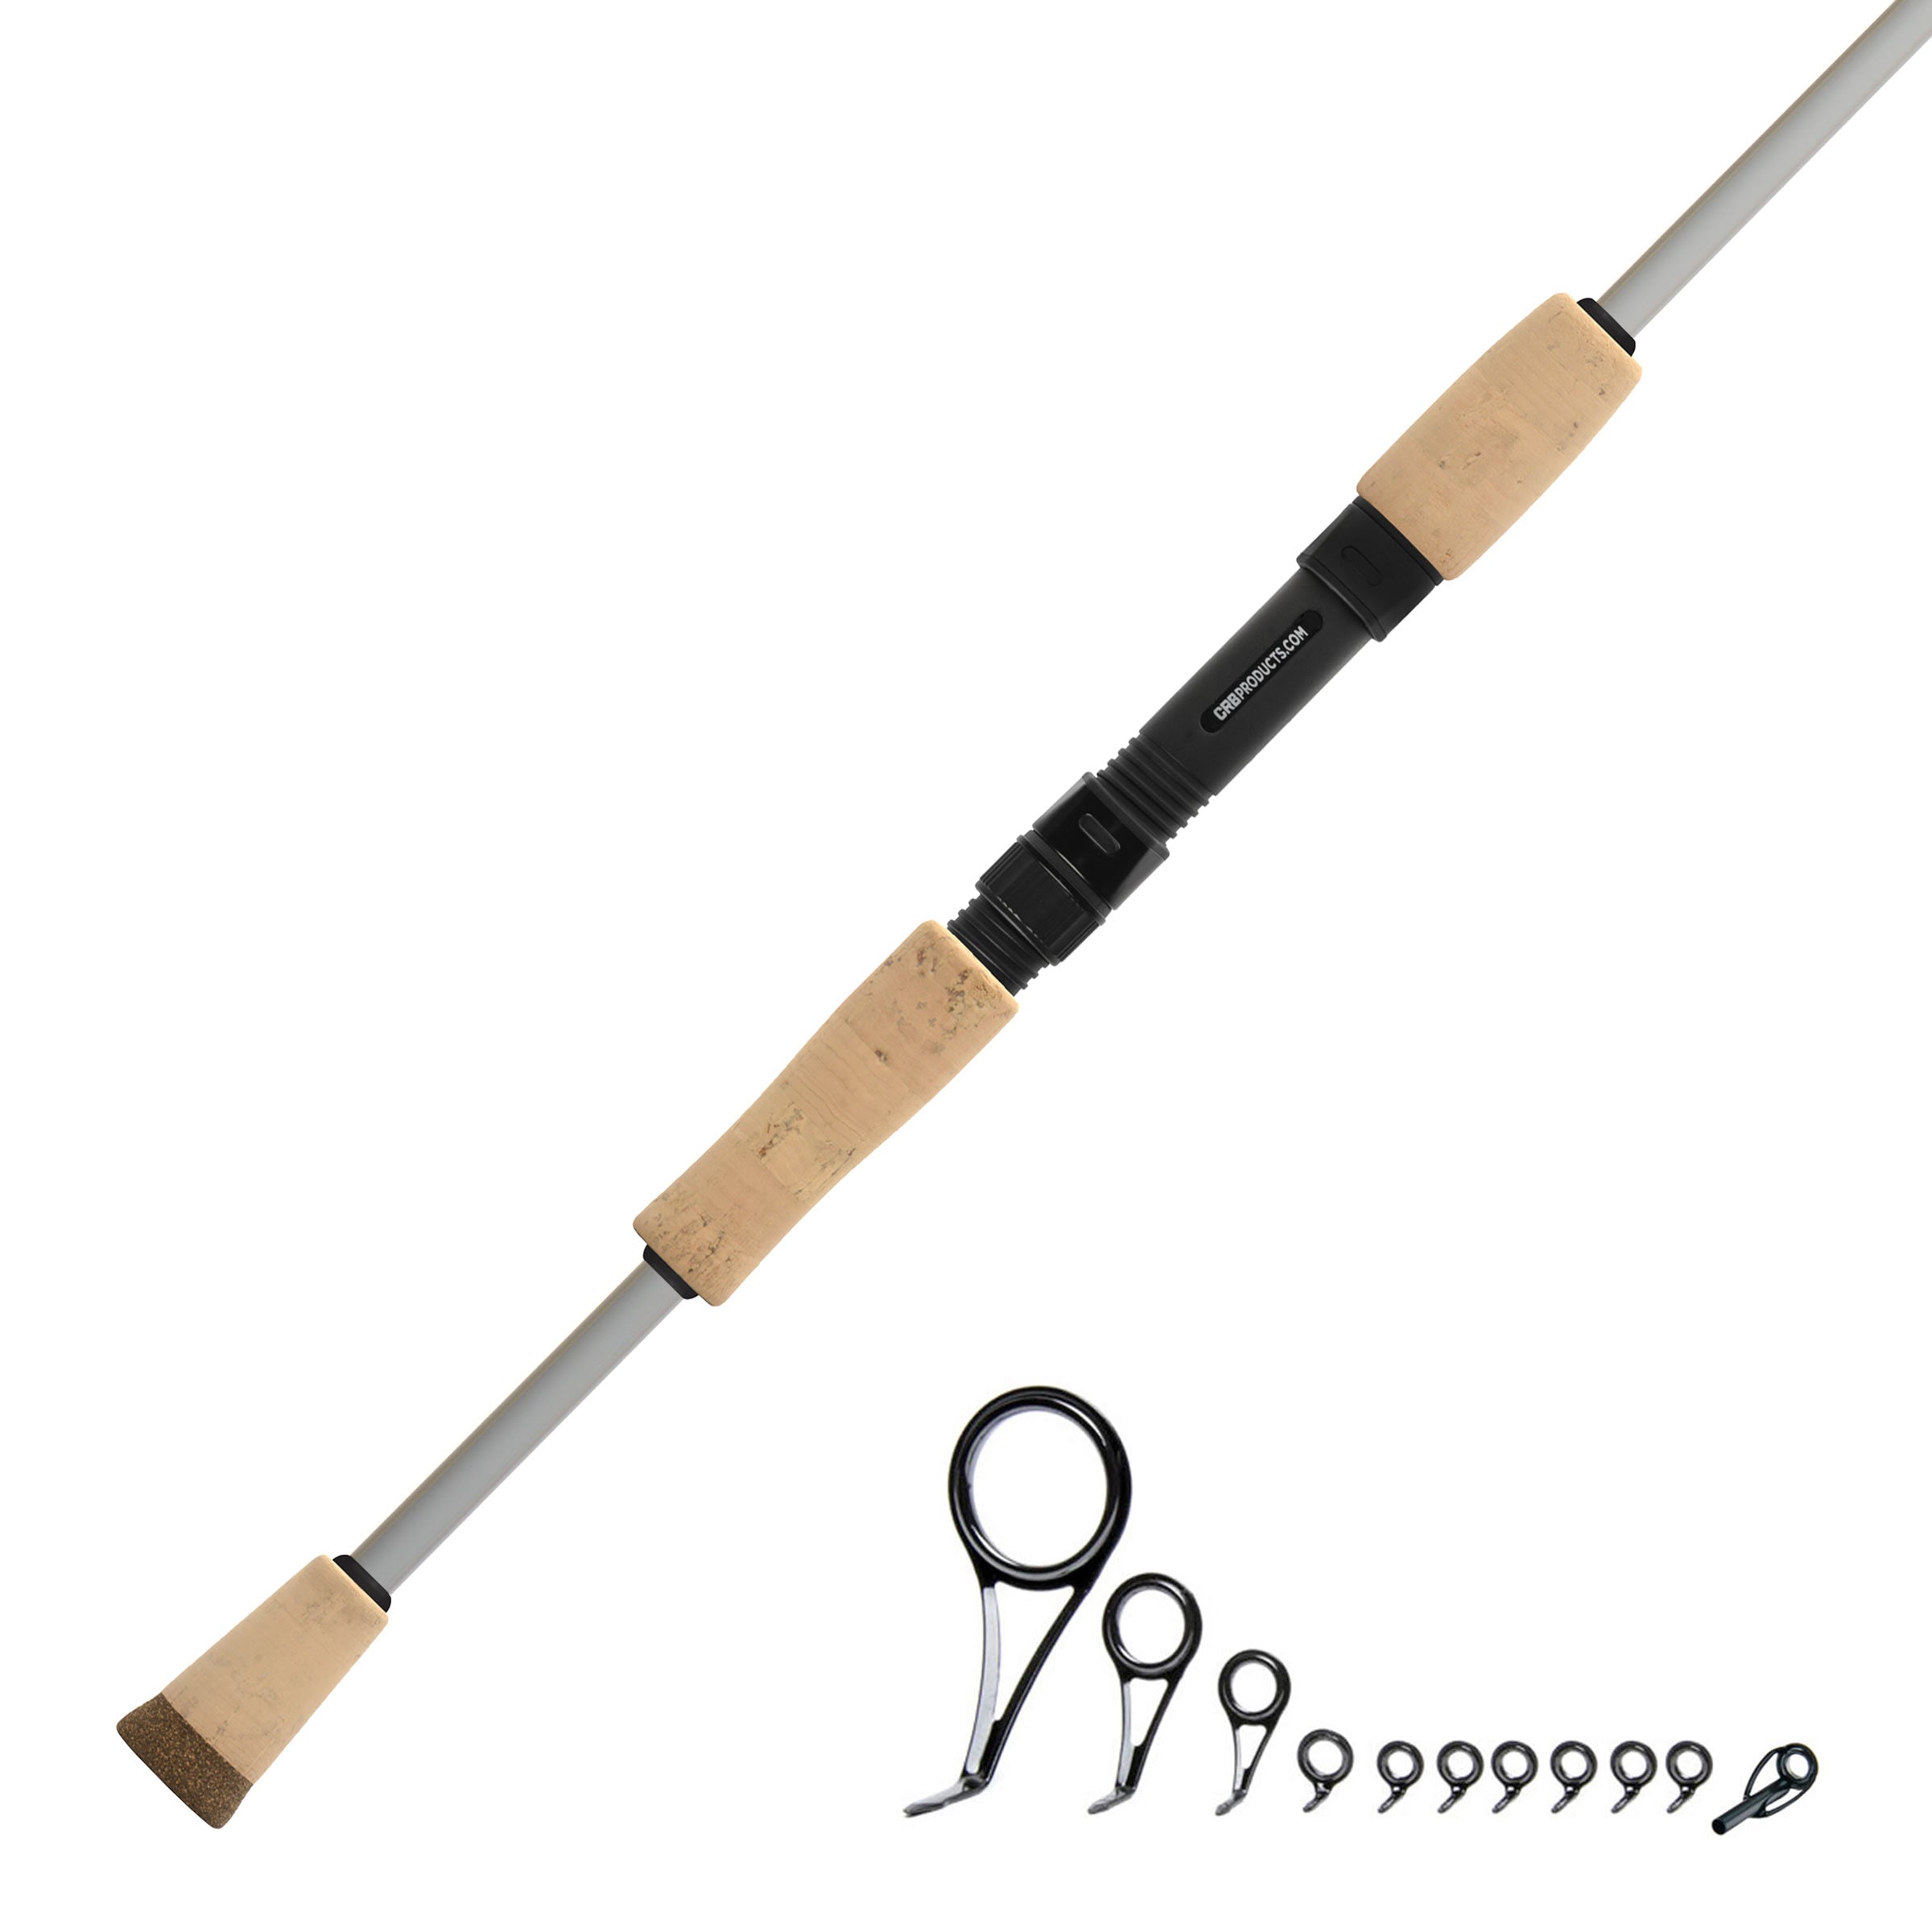 2x Fishing Rod Handle Composite Cork Handle Grip with Reel Seat 